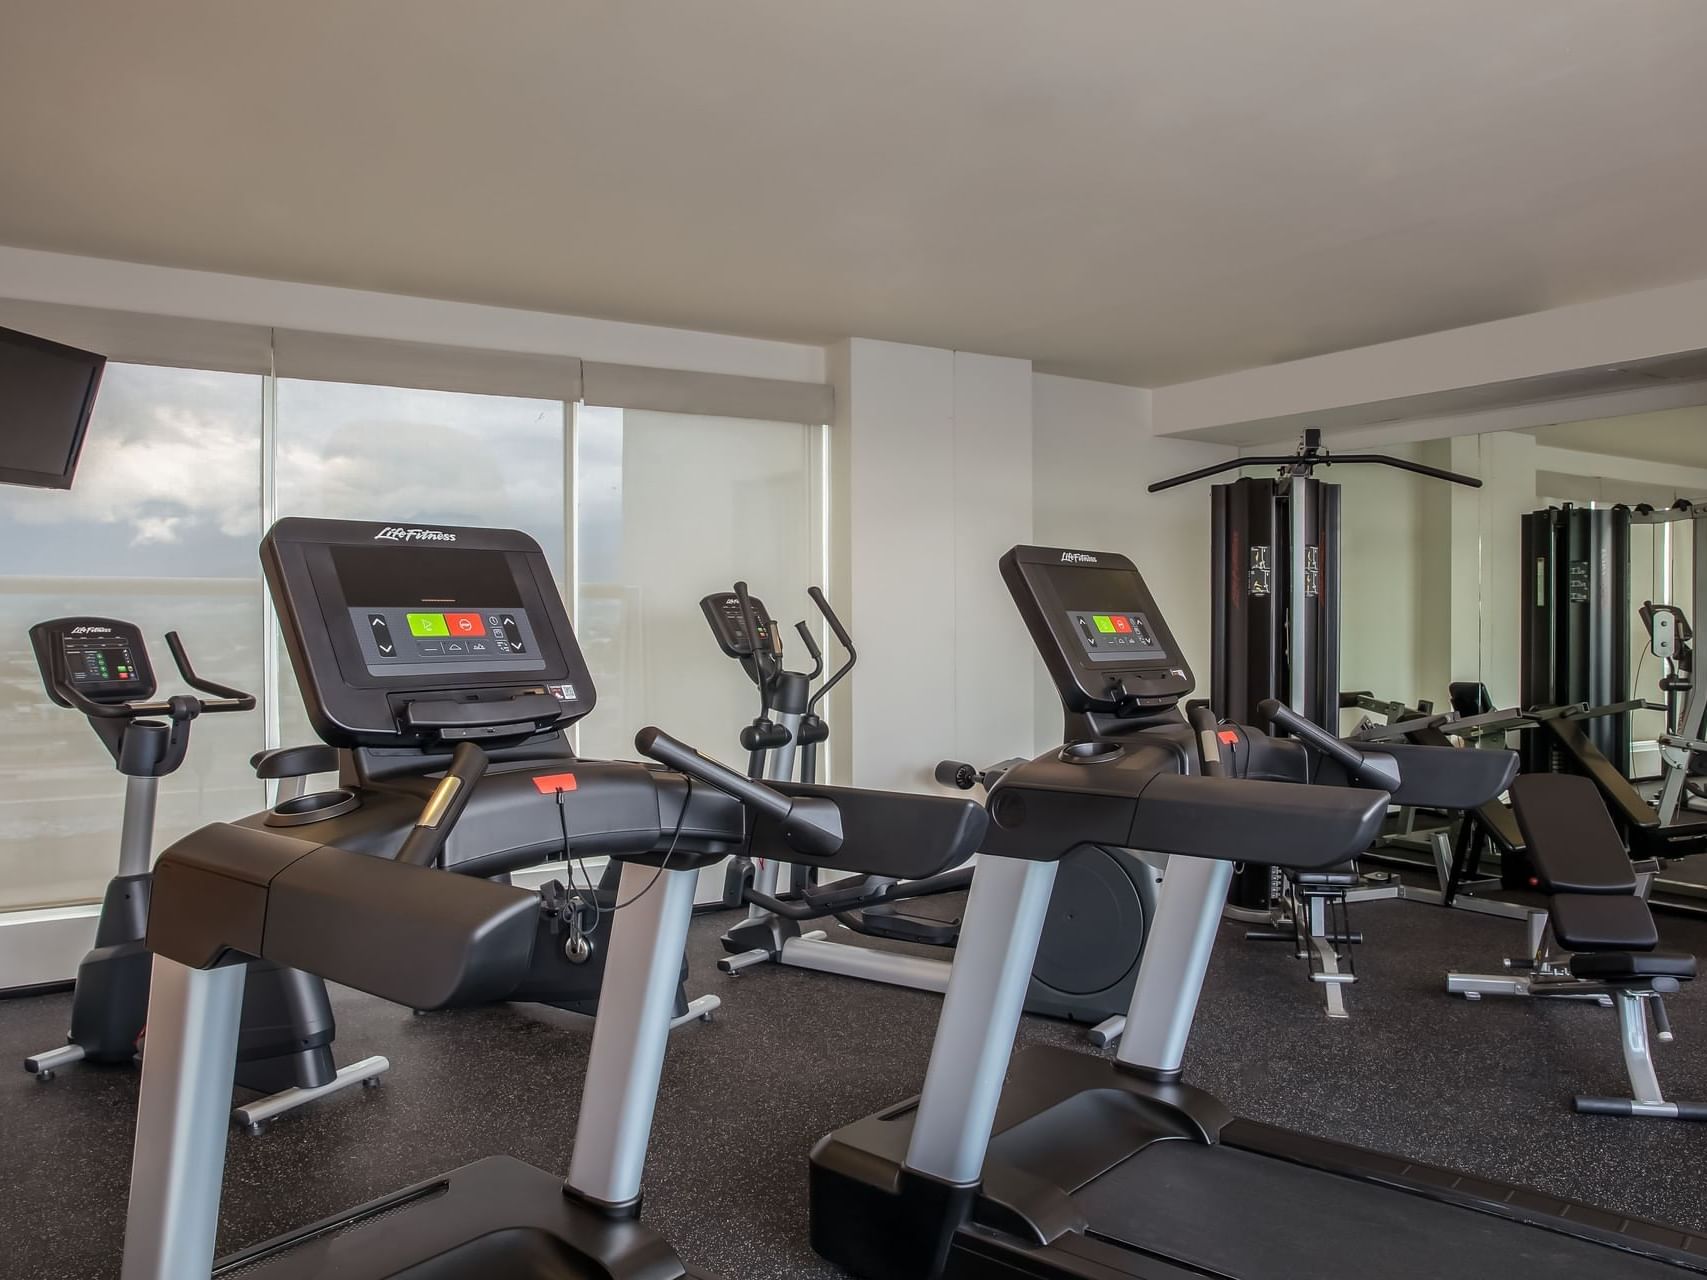 Fully equipped Gym Wellness Center at Fiesta Inn Hotels